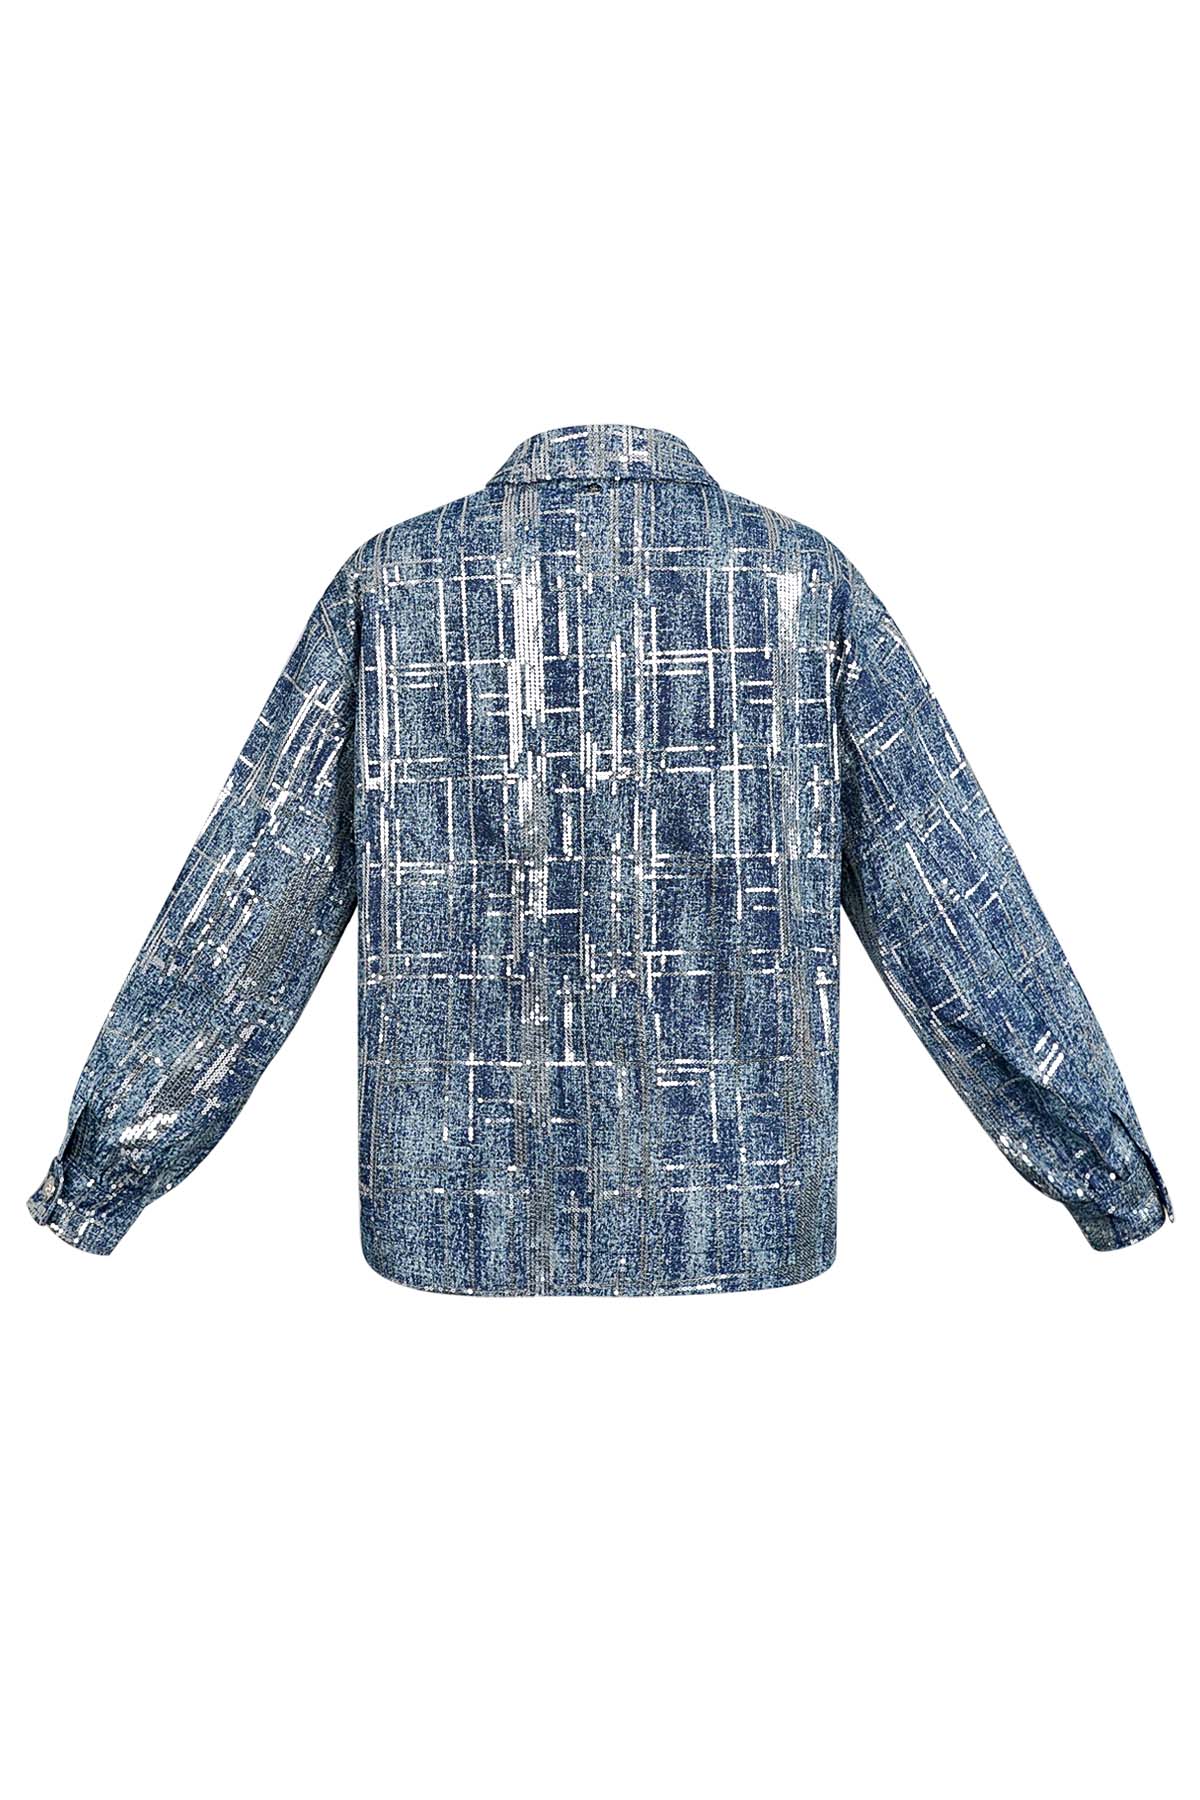 Jacket denim look with sequins - blue - L Picture7